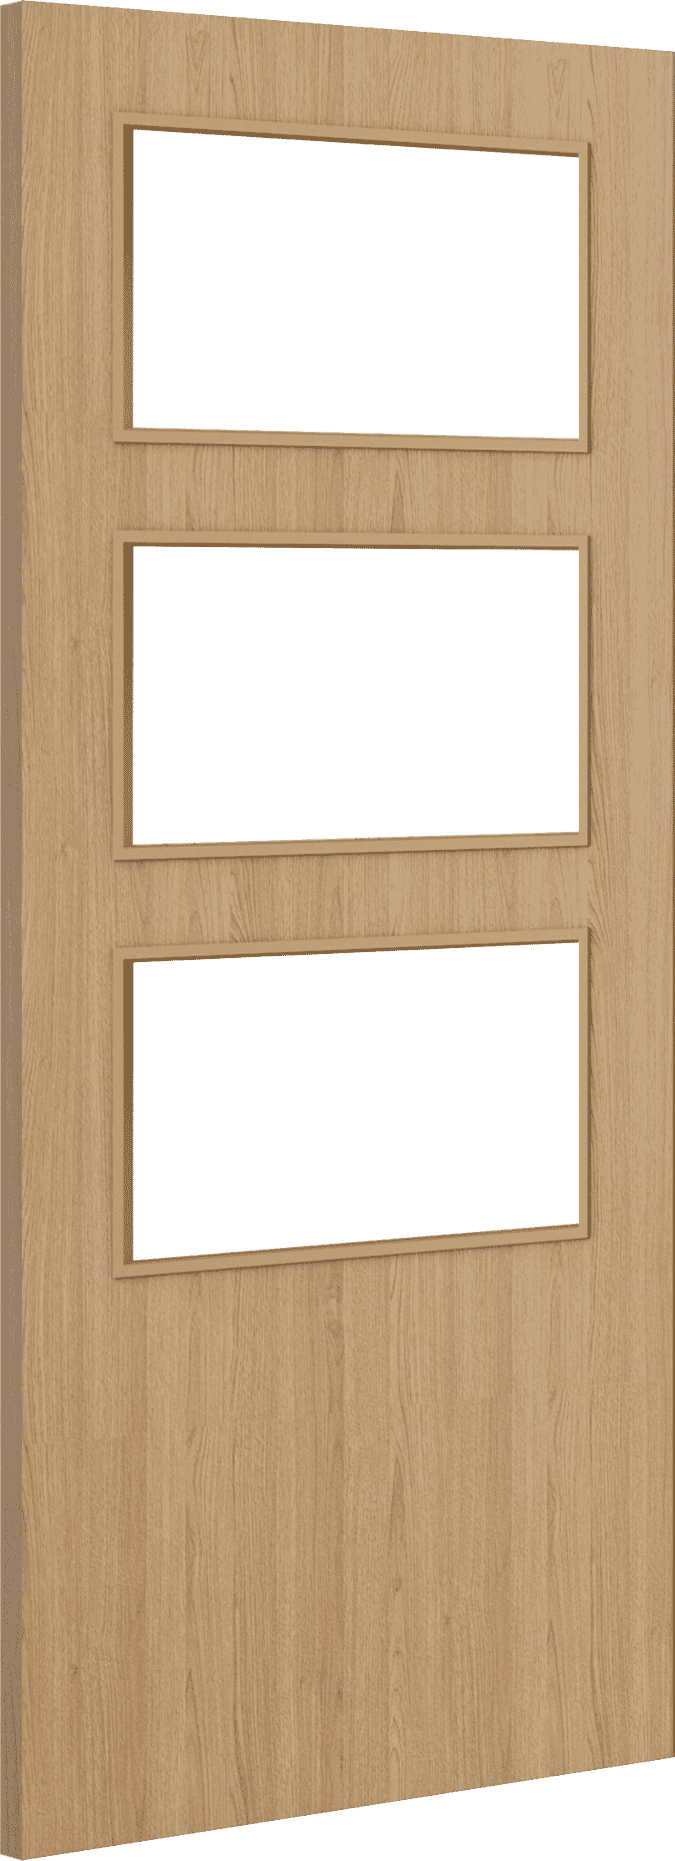 1981mm x 838mm x 44mm (33") Architectural Oak 03 Frosted Glazed - Prefinished FD30 Fire Door Blank